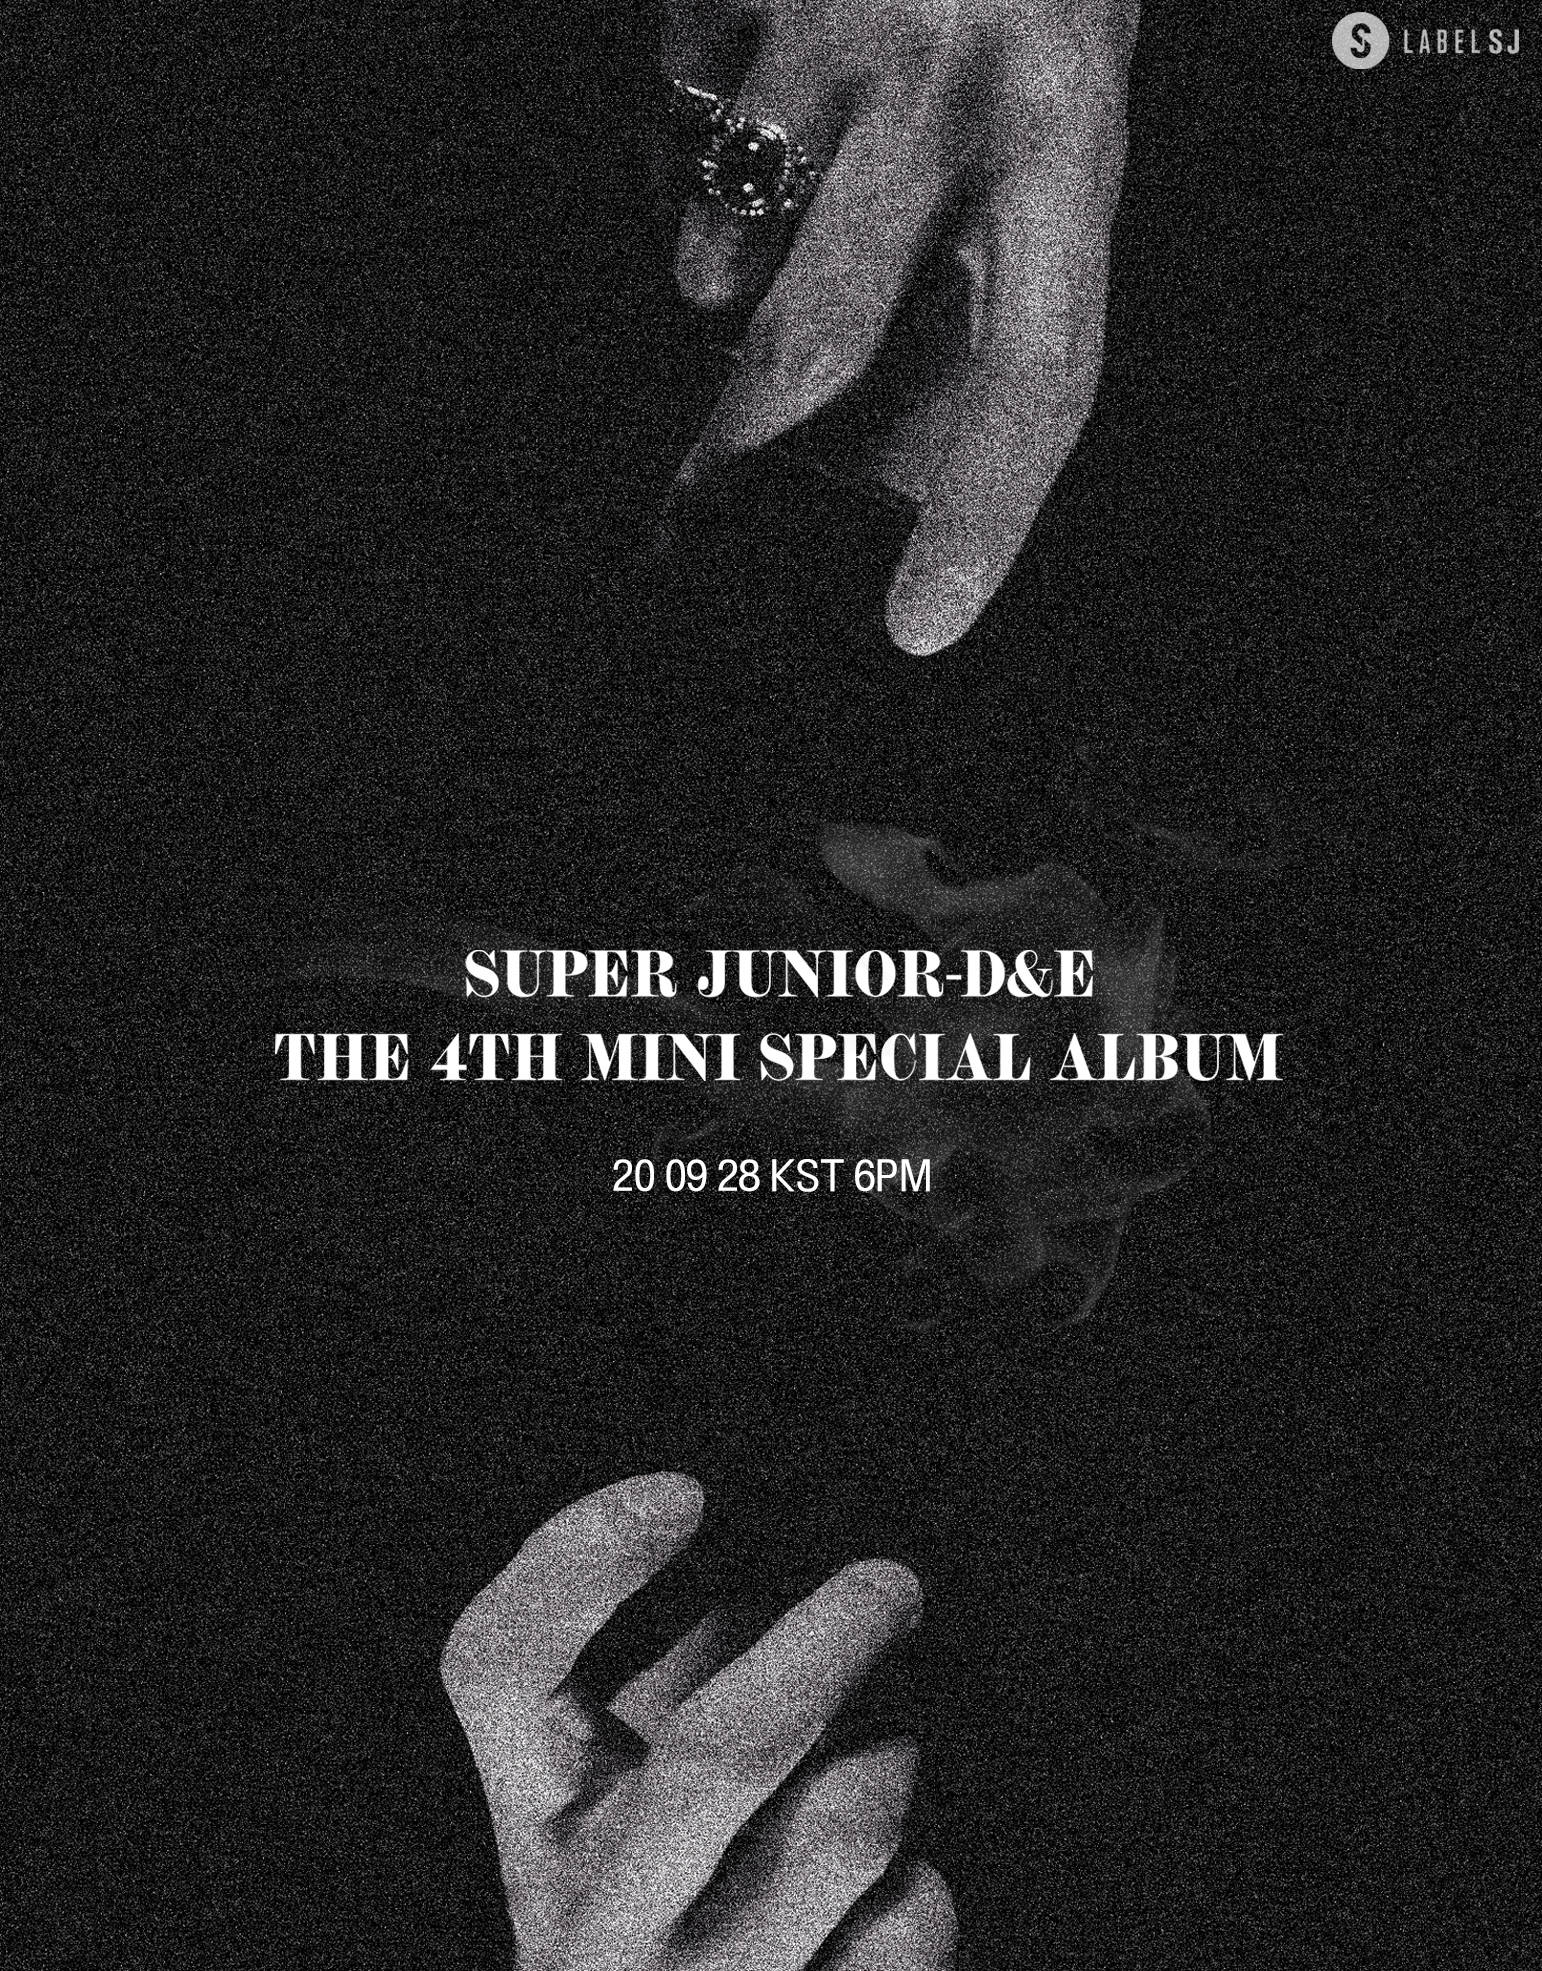 SUPER JUNIOR-D&E将于9月28日发行迷你4辑特别专辑，追加收录两首歌曲